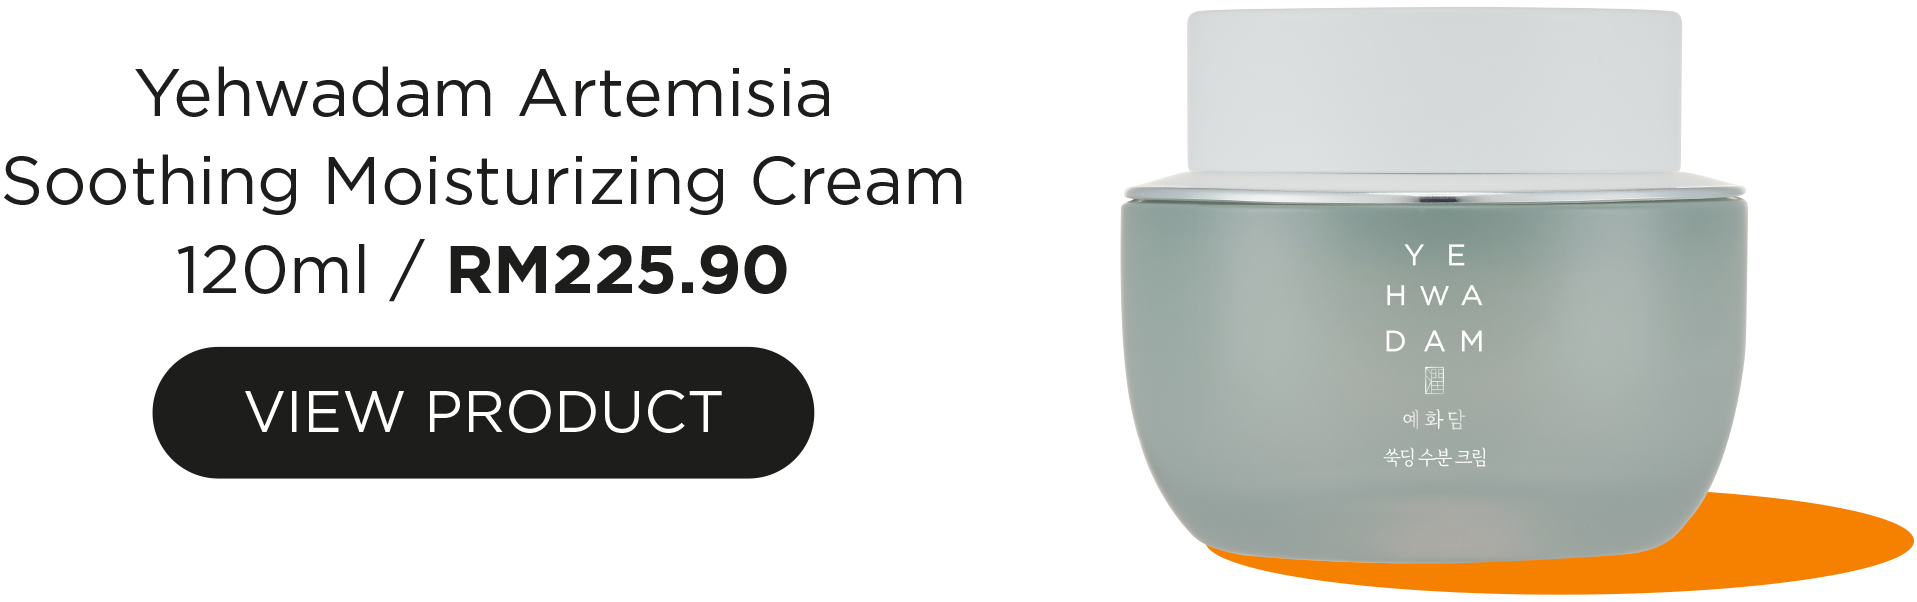 Yehwadam Artemisia Soothing Moisturizing Cream